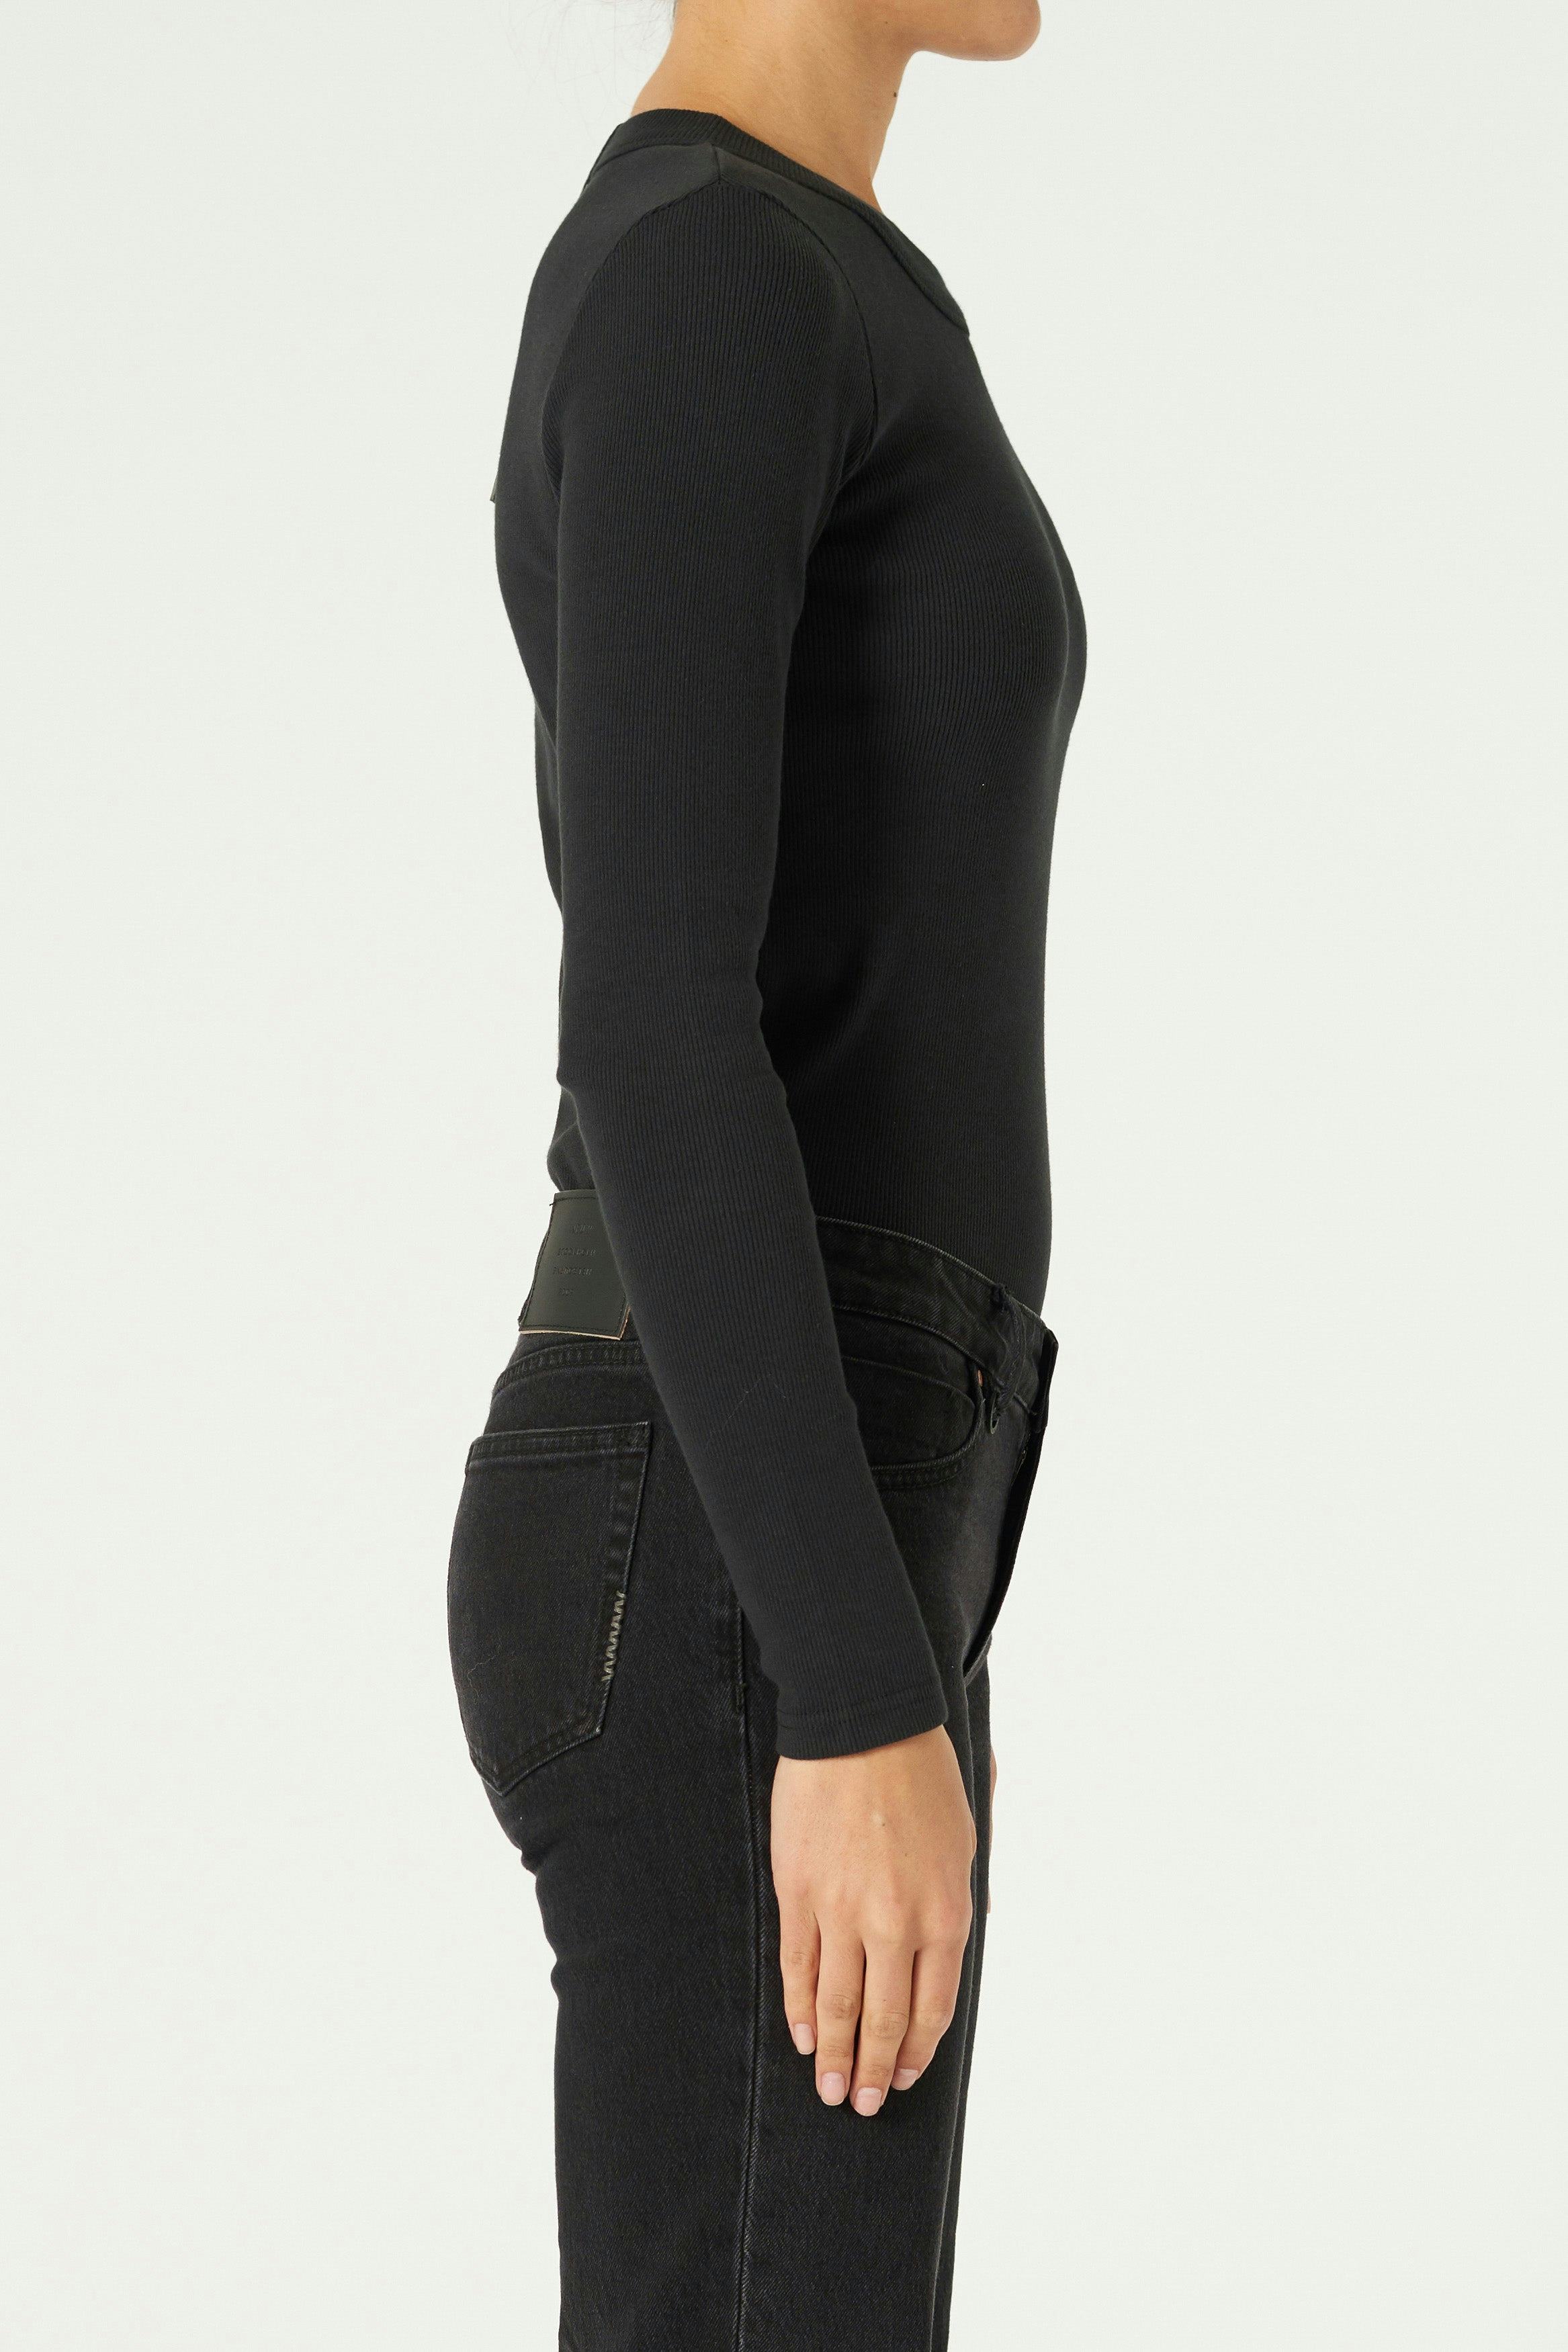 Jonesy Long Sleeve - Black Neuw straight black womens-blouse 